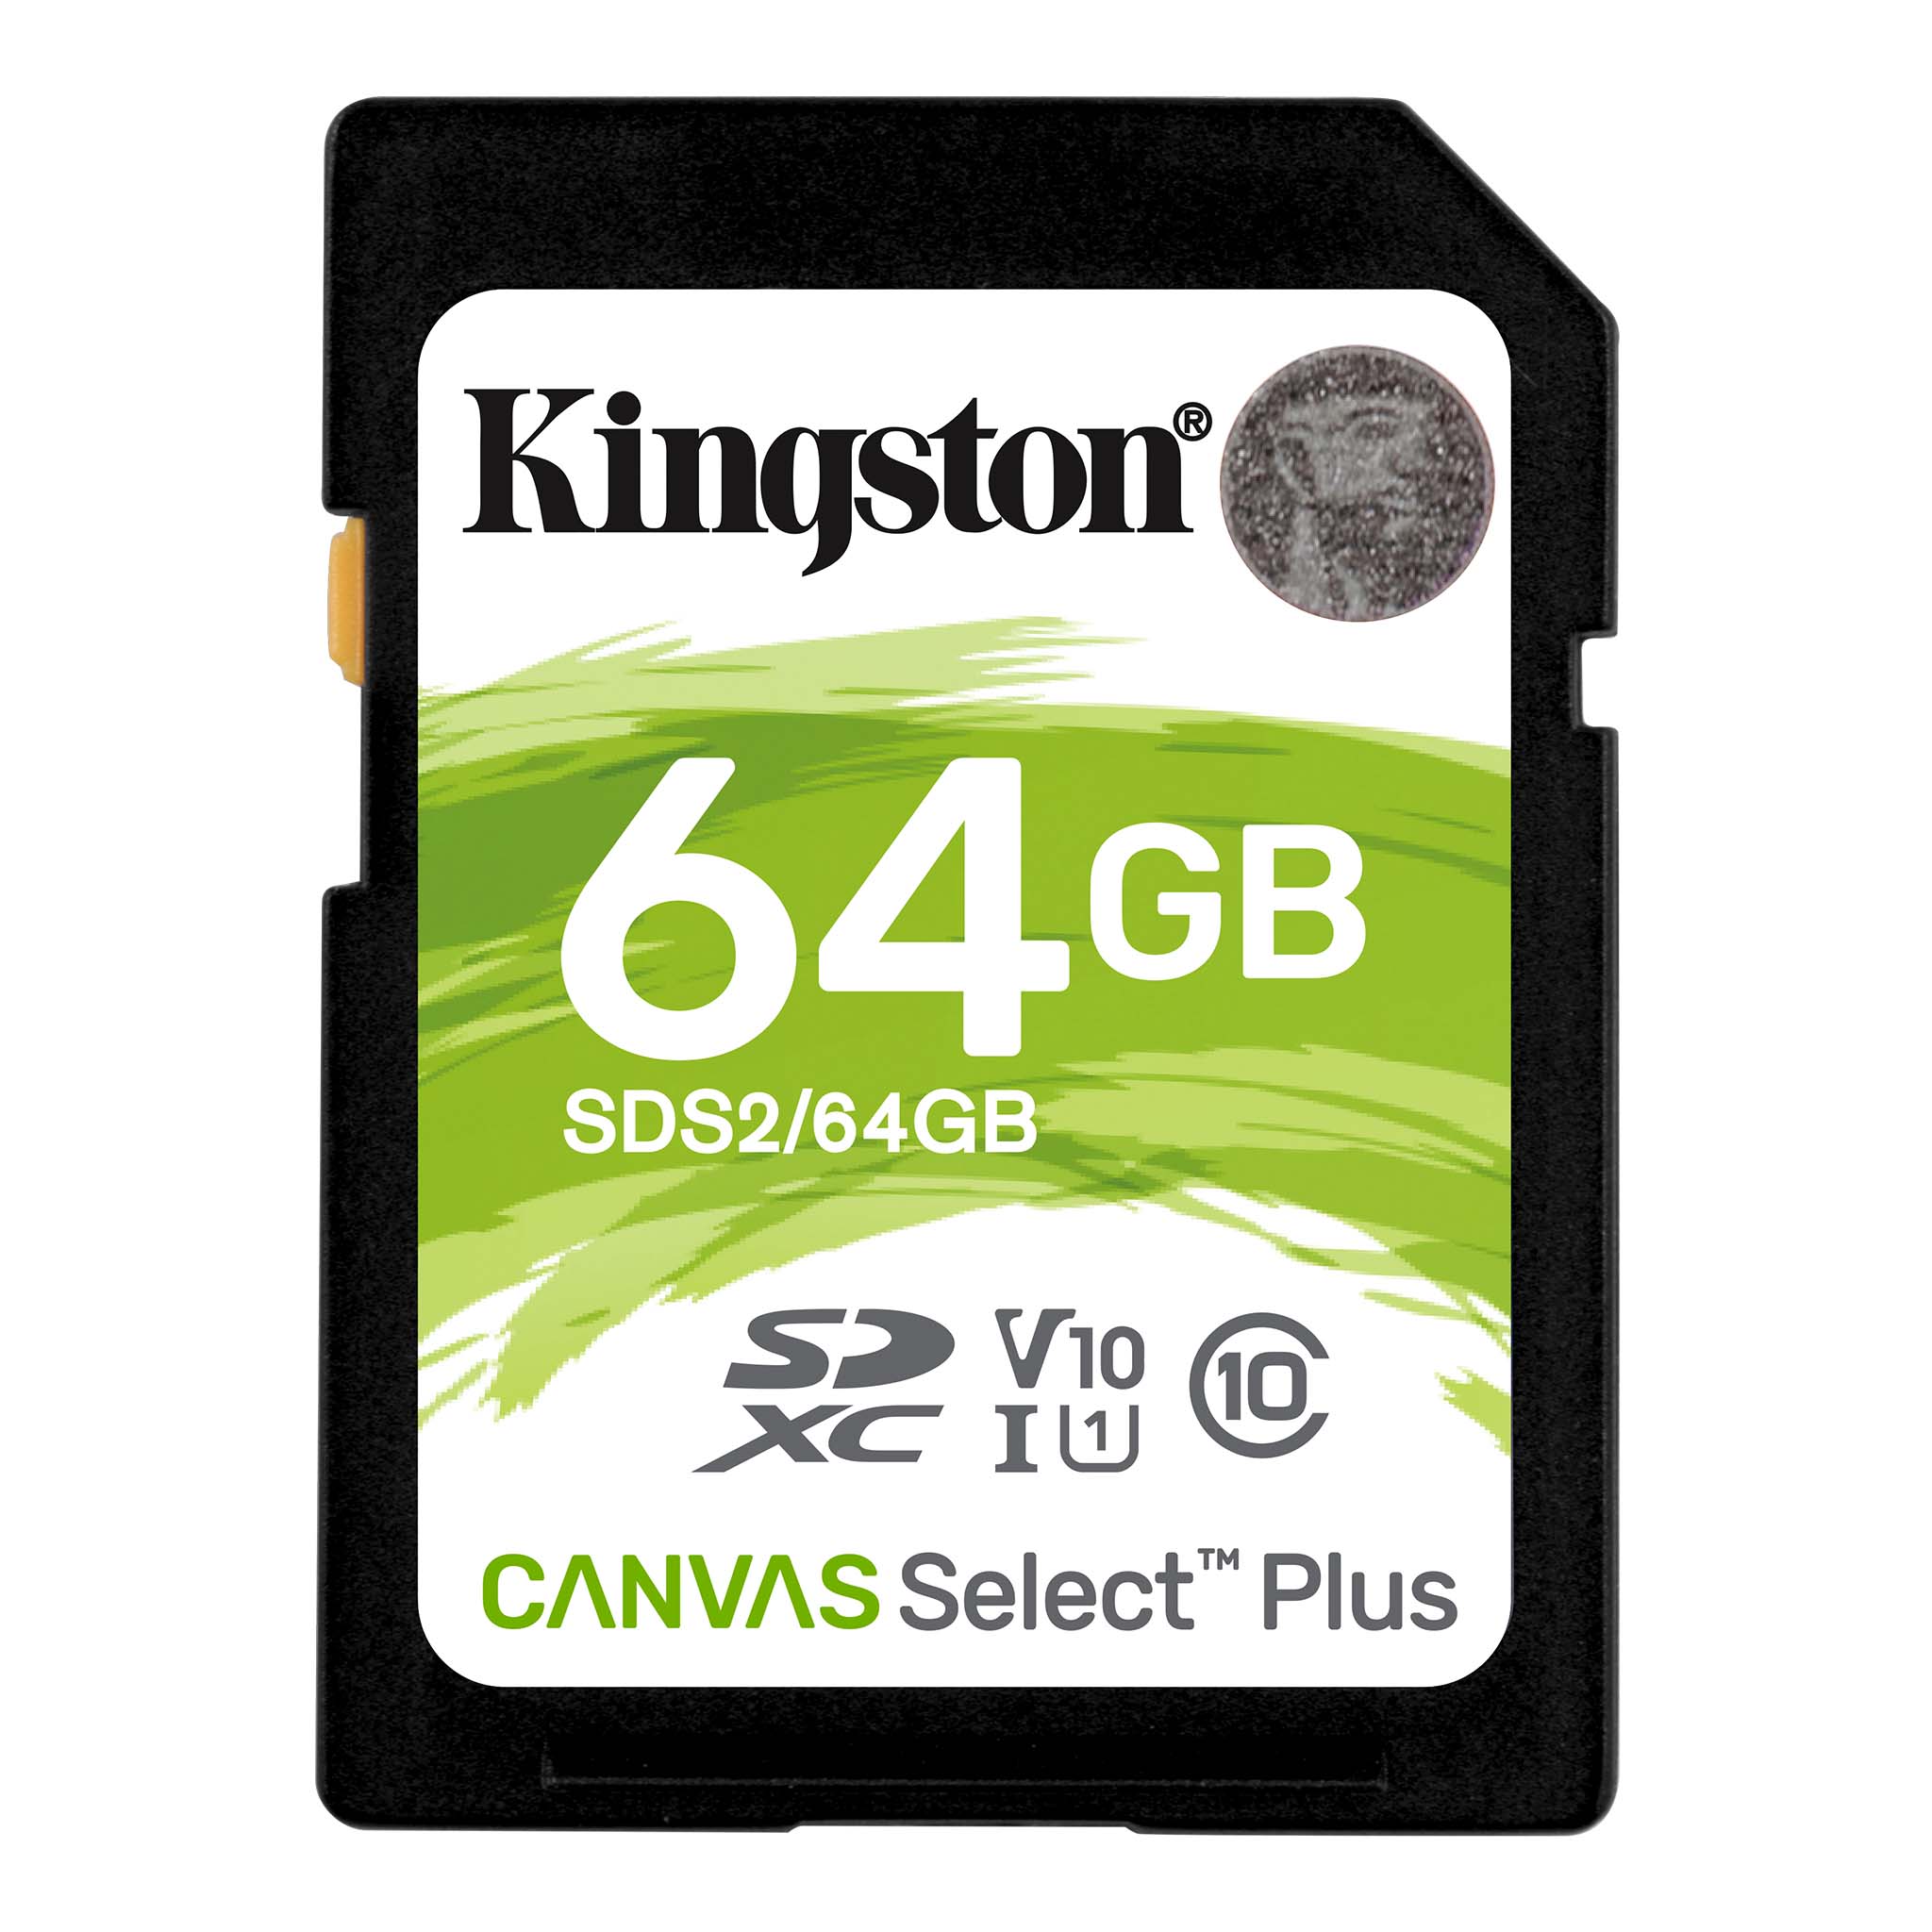 100MBs Works with Kingston Kingston 64GB Viewsonic Viewbok 730 MicroSDXC Canvas Select Plus Card Verified by SanFlash. 